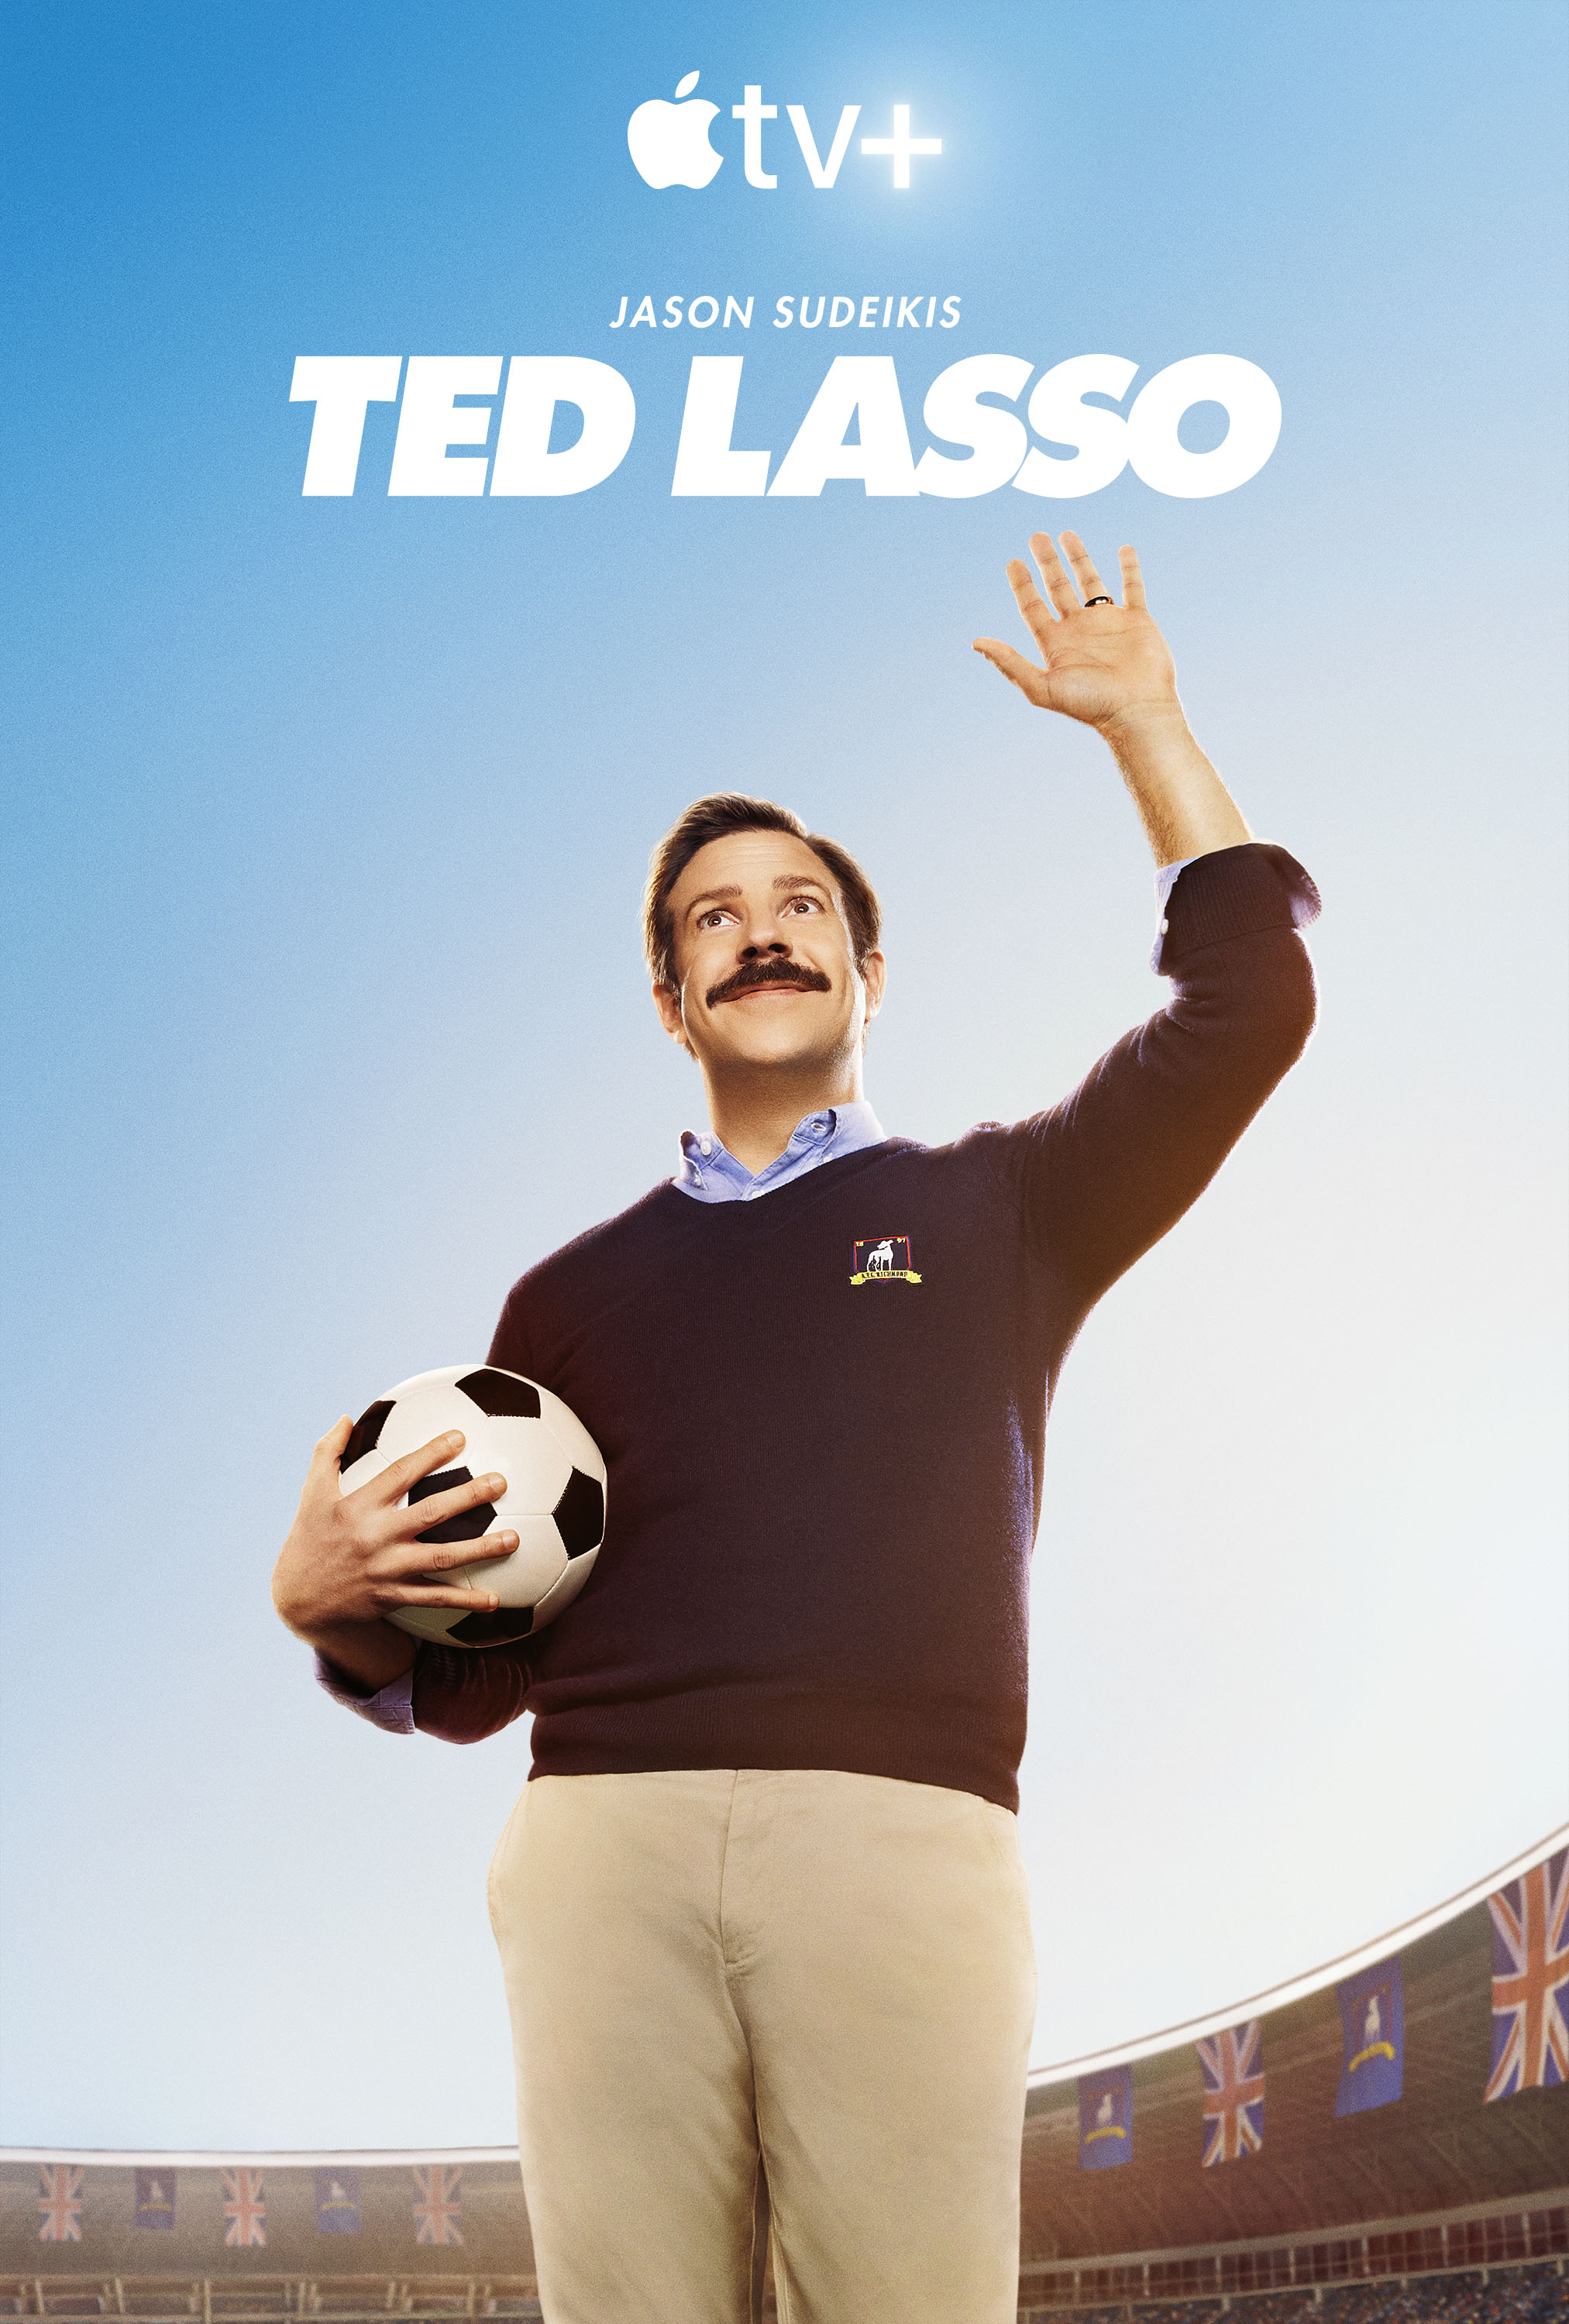 Ted Lasso Film ∣ Kritik ∣ Trailer Filmdienst 